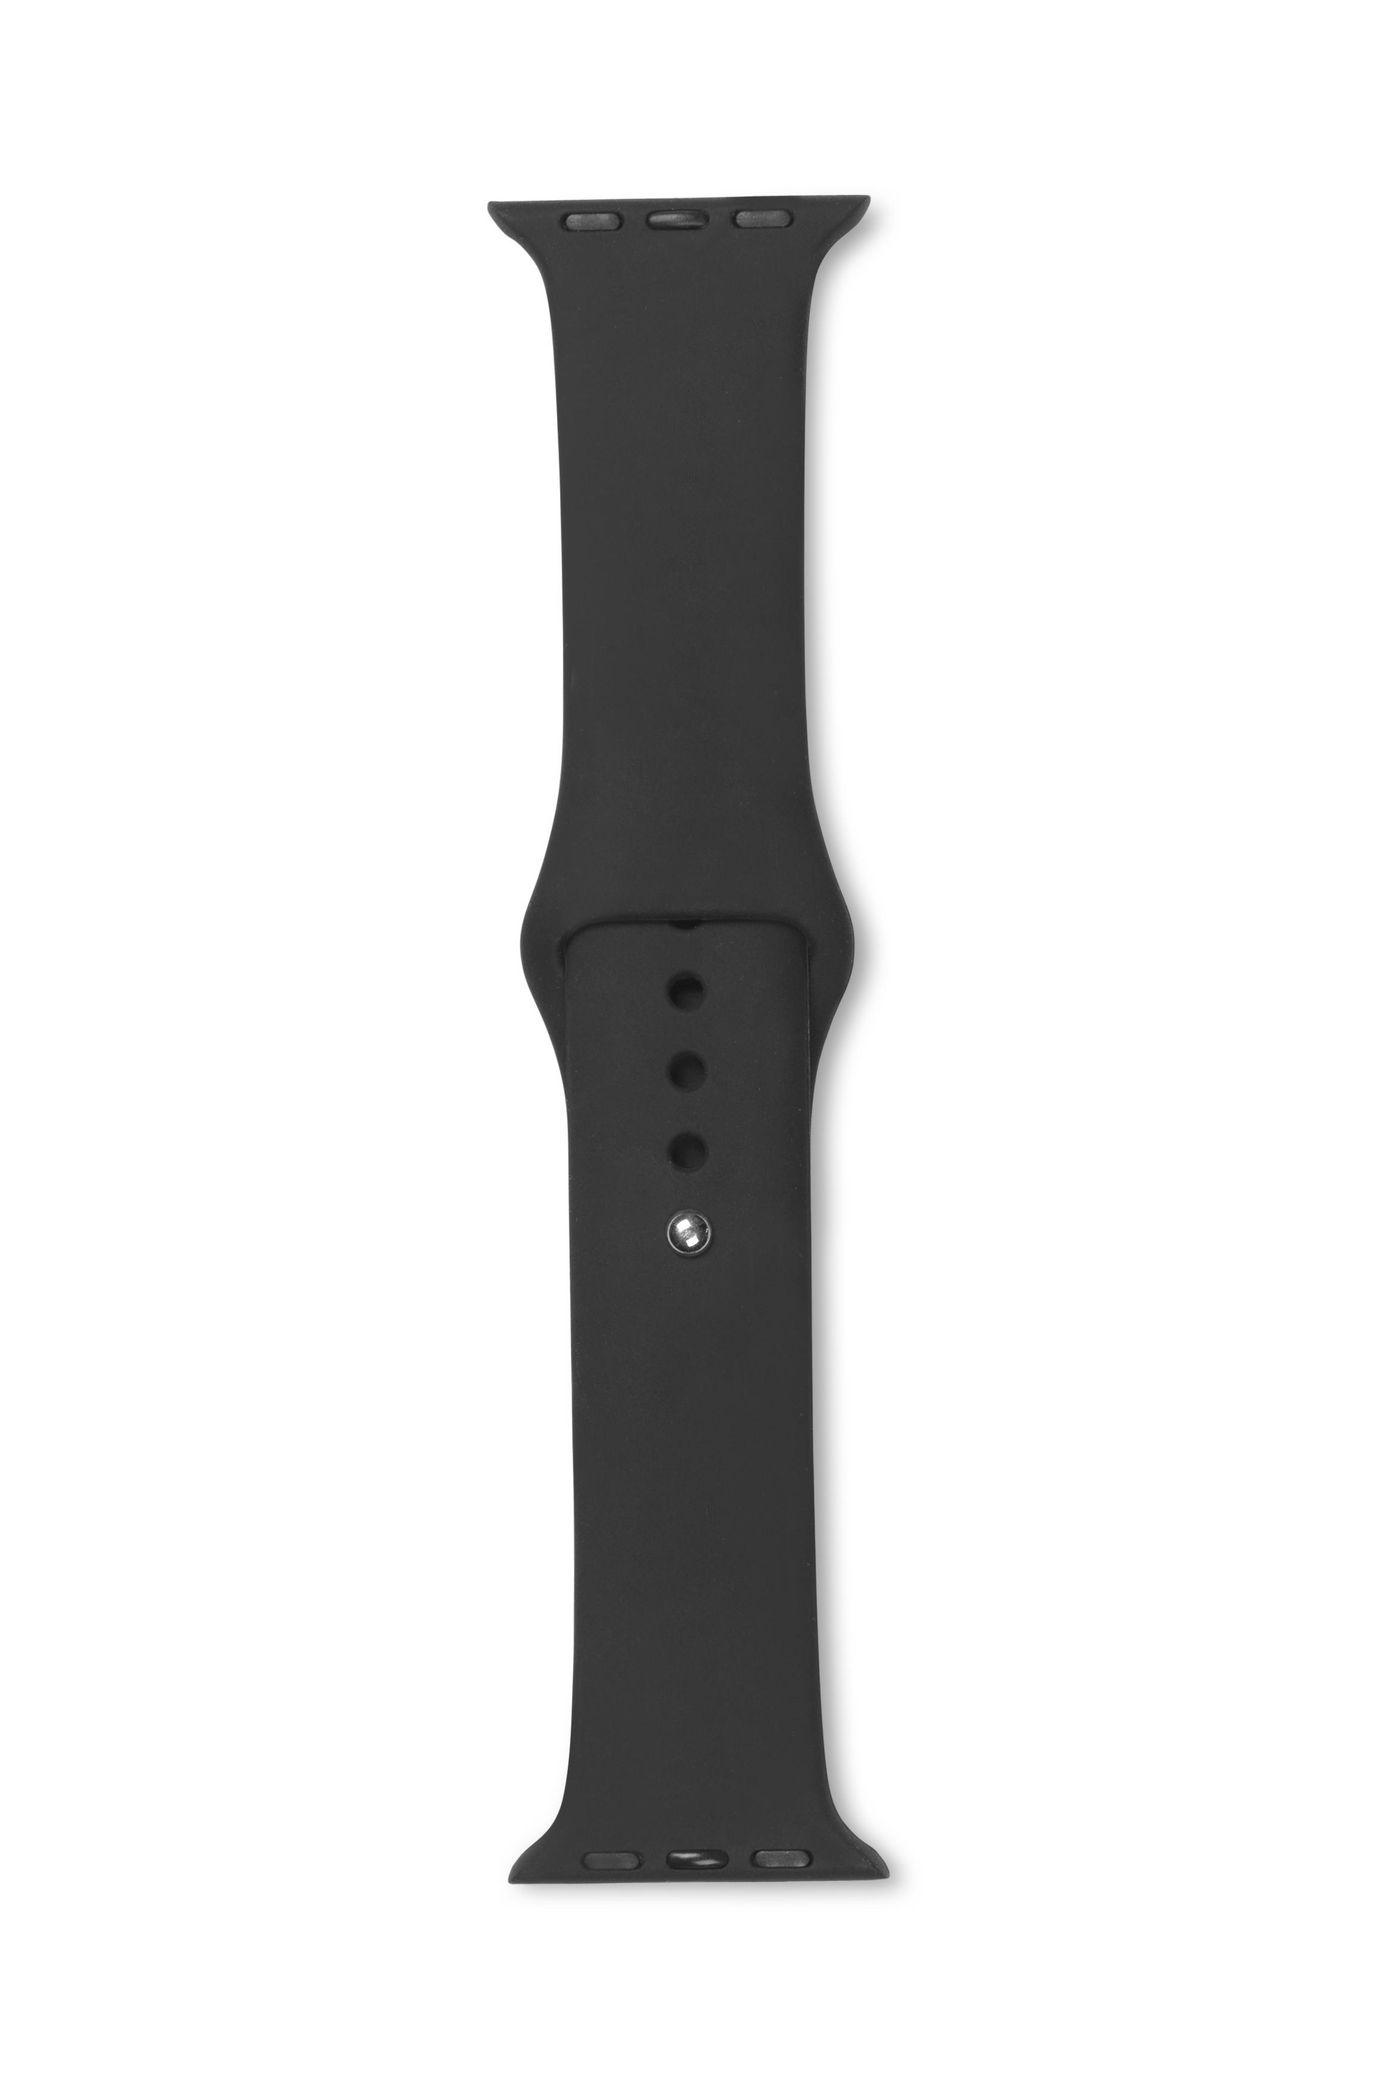 eSTUFF ES660120 W125821913 Apple Watch Silicone Strap 